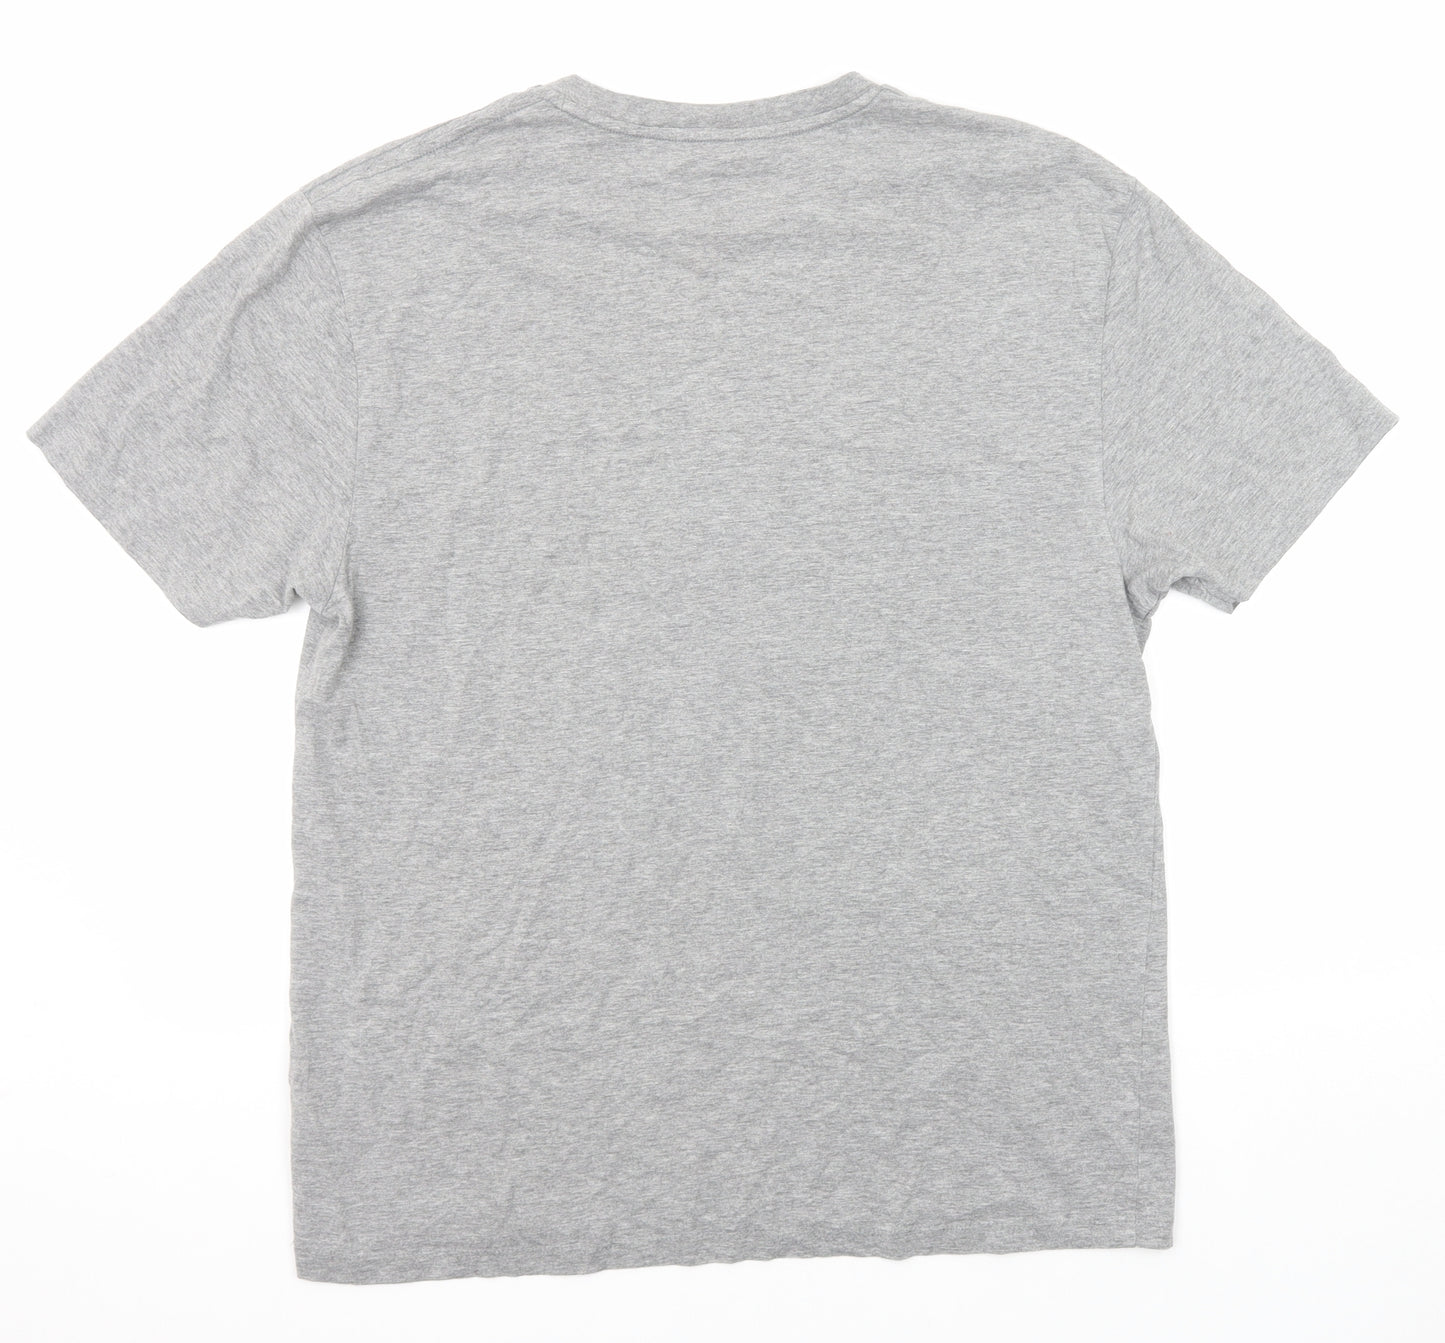 Sand Stone Mens Grey Cotton T-Shirt Size L Round Neck